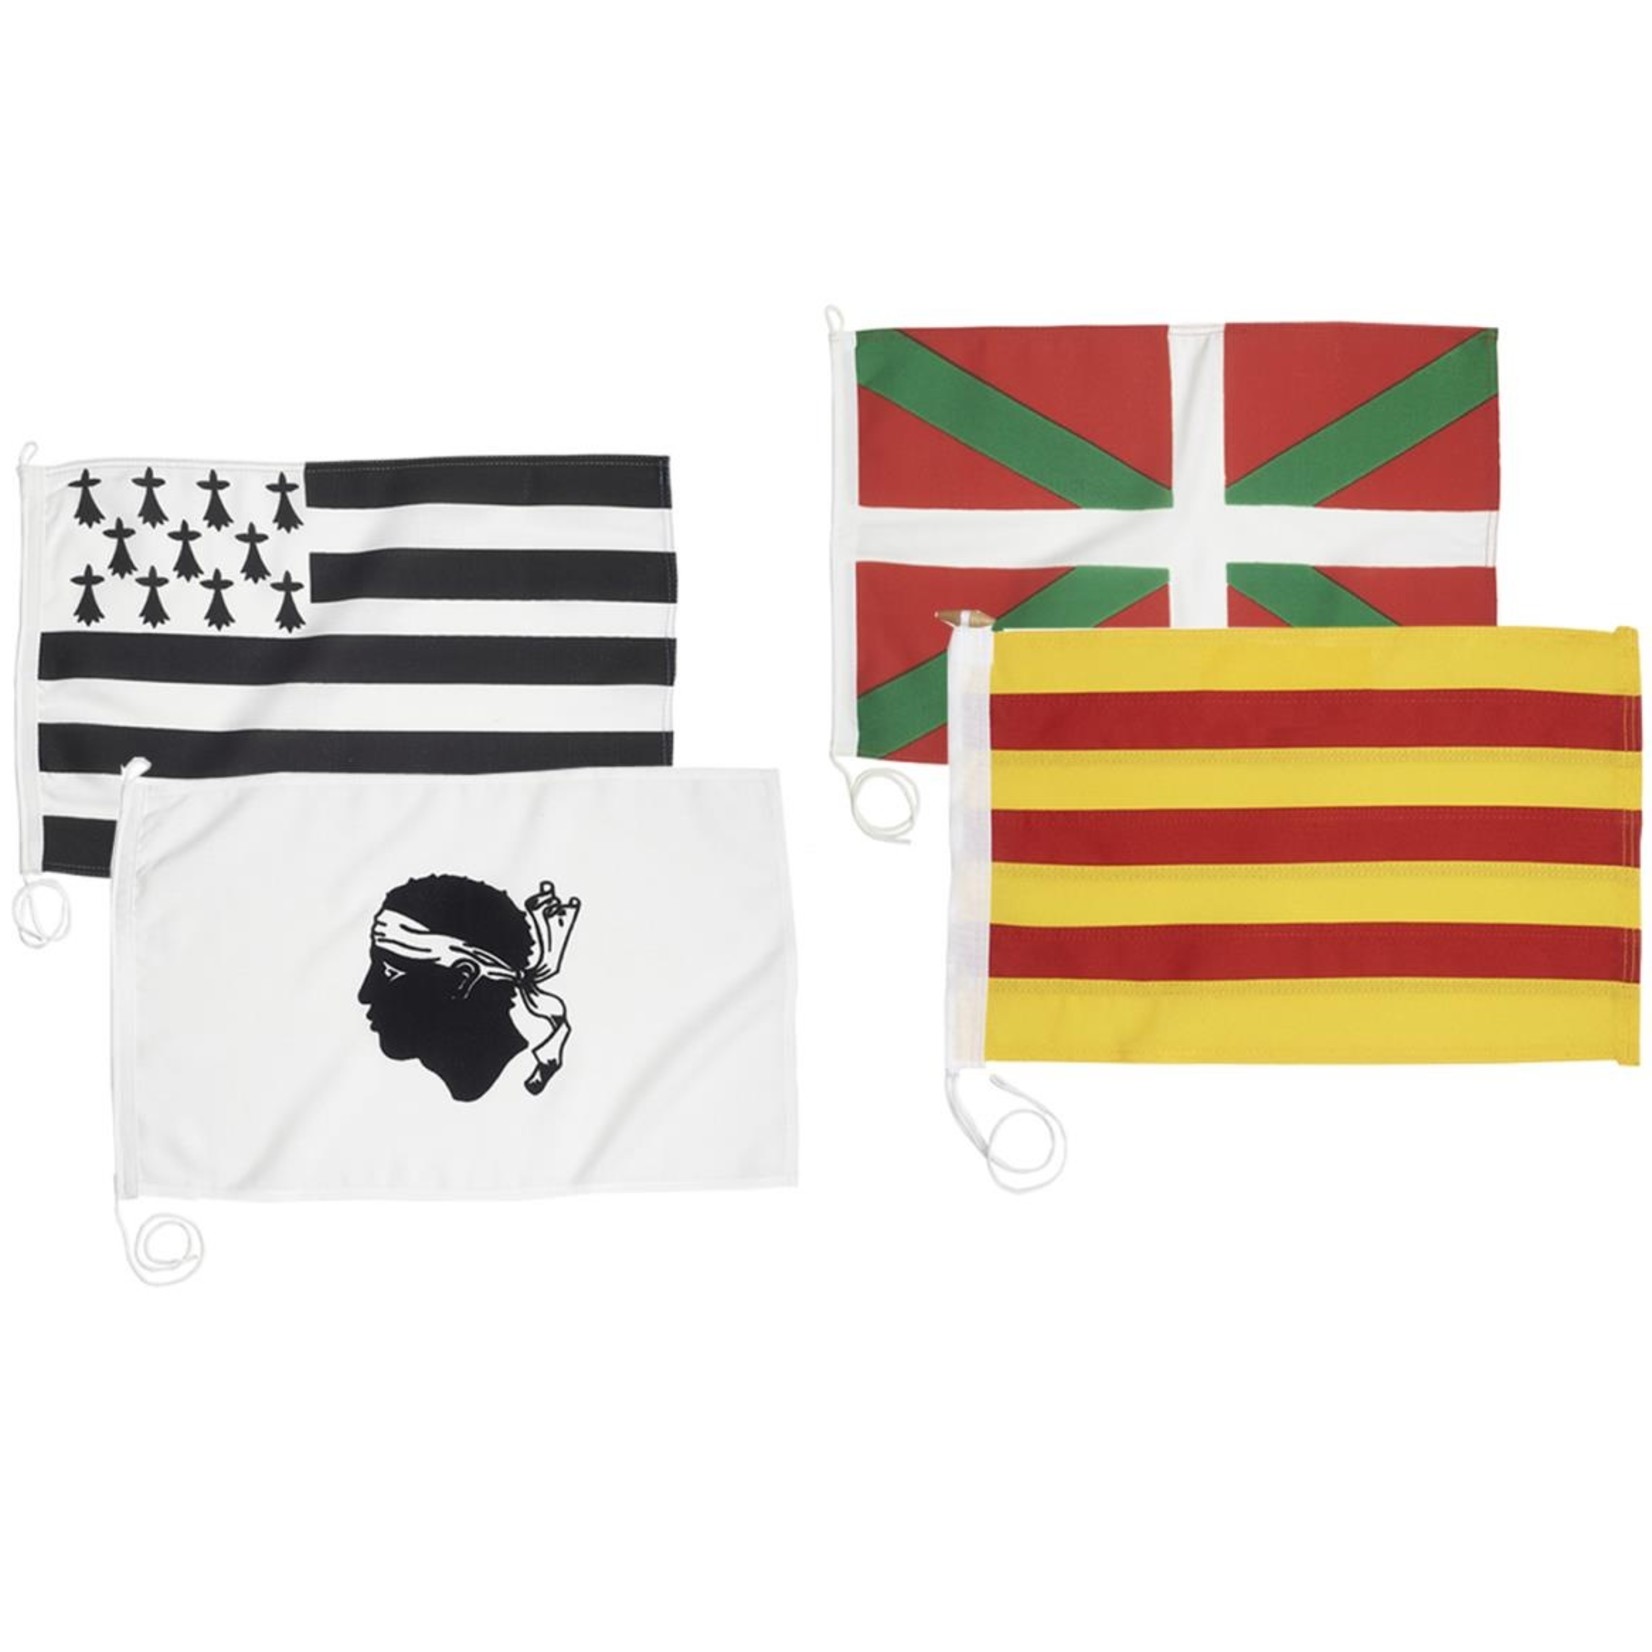 Plastimo Catalan flag cm 30x45